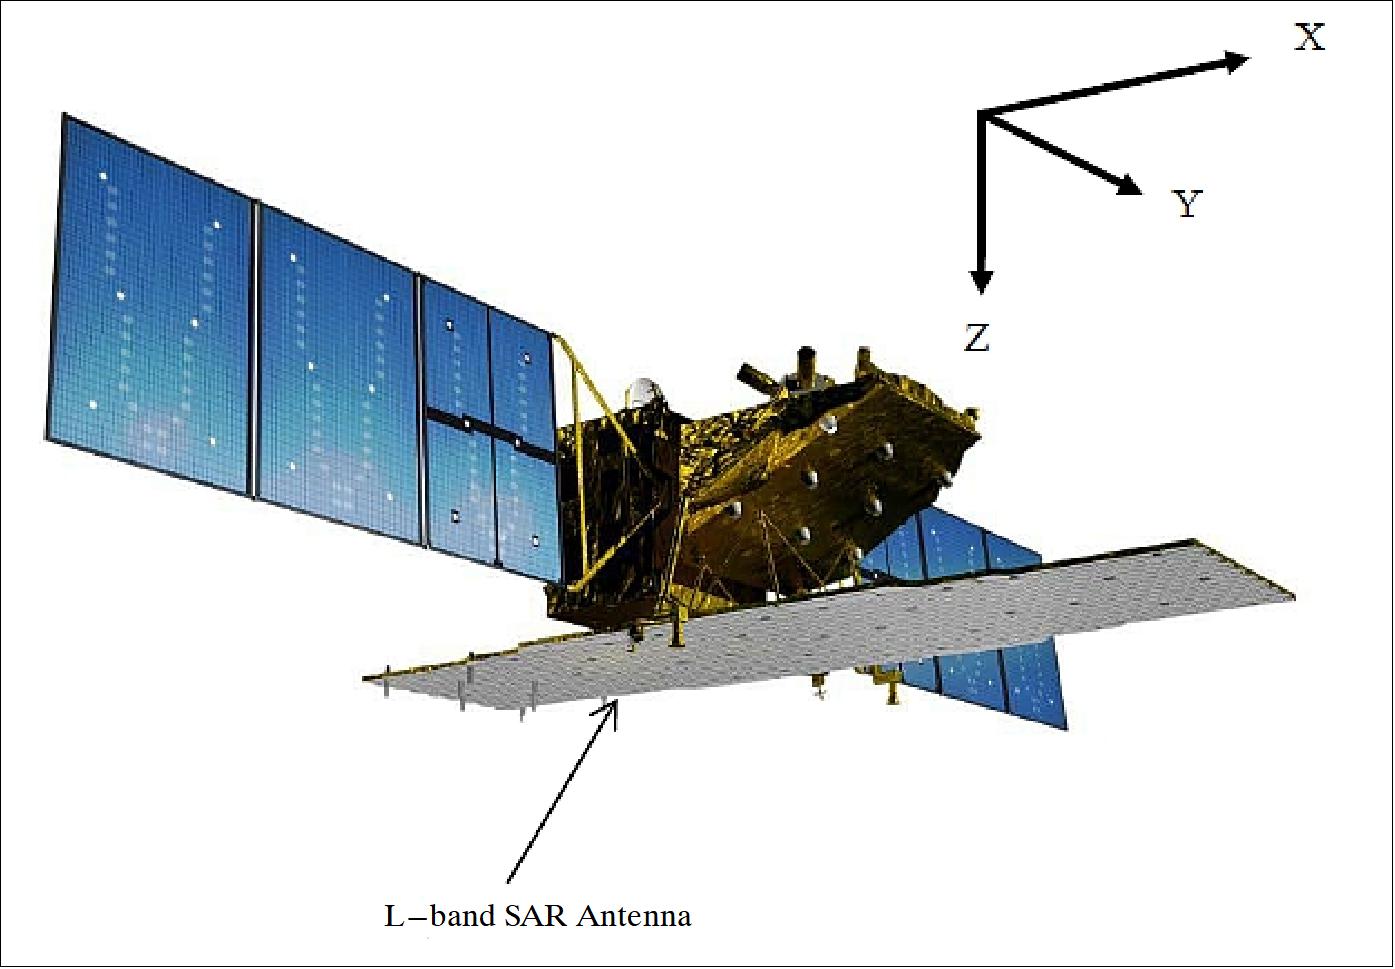 Figure 4: Illustration of the deployed ALOS-2 spacecraft (image credit: JAXA) 13) 14)